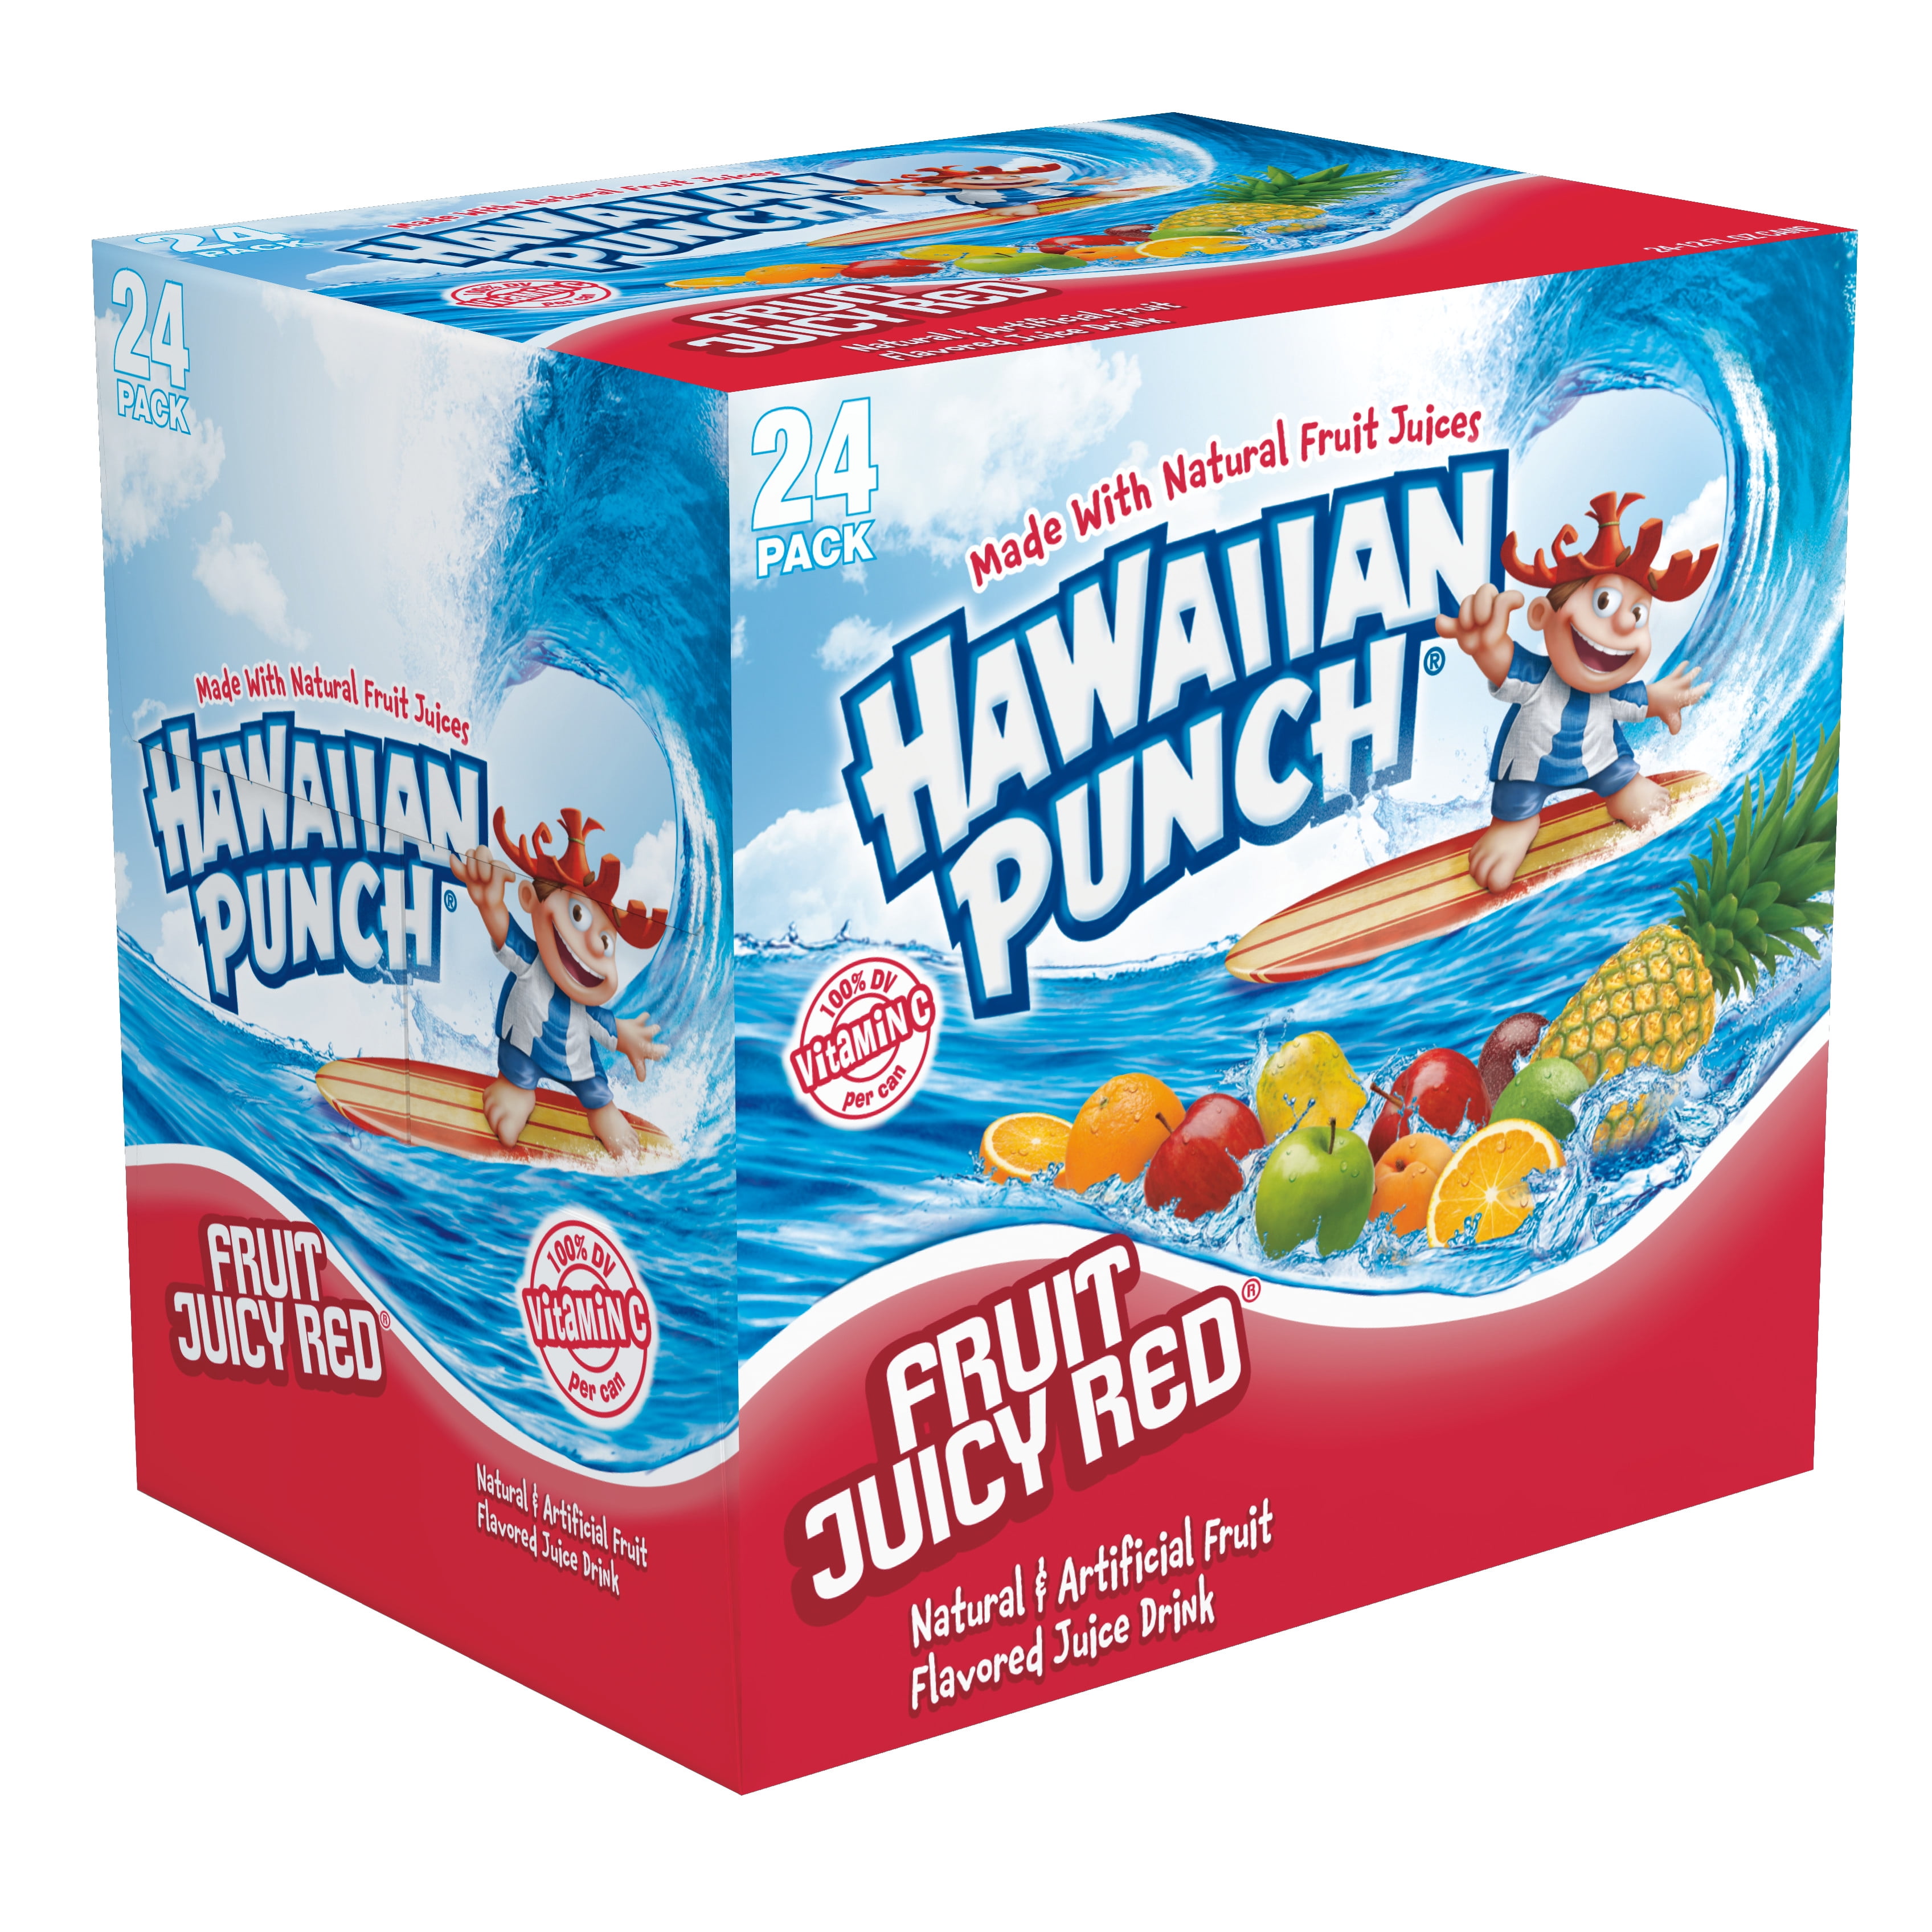 Hawaiian Punch Juicy Red Punch, 20 oz (24 Bottles)